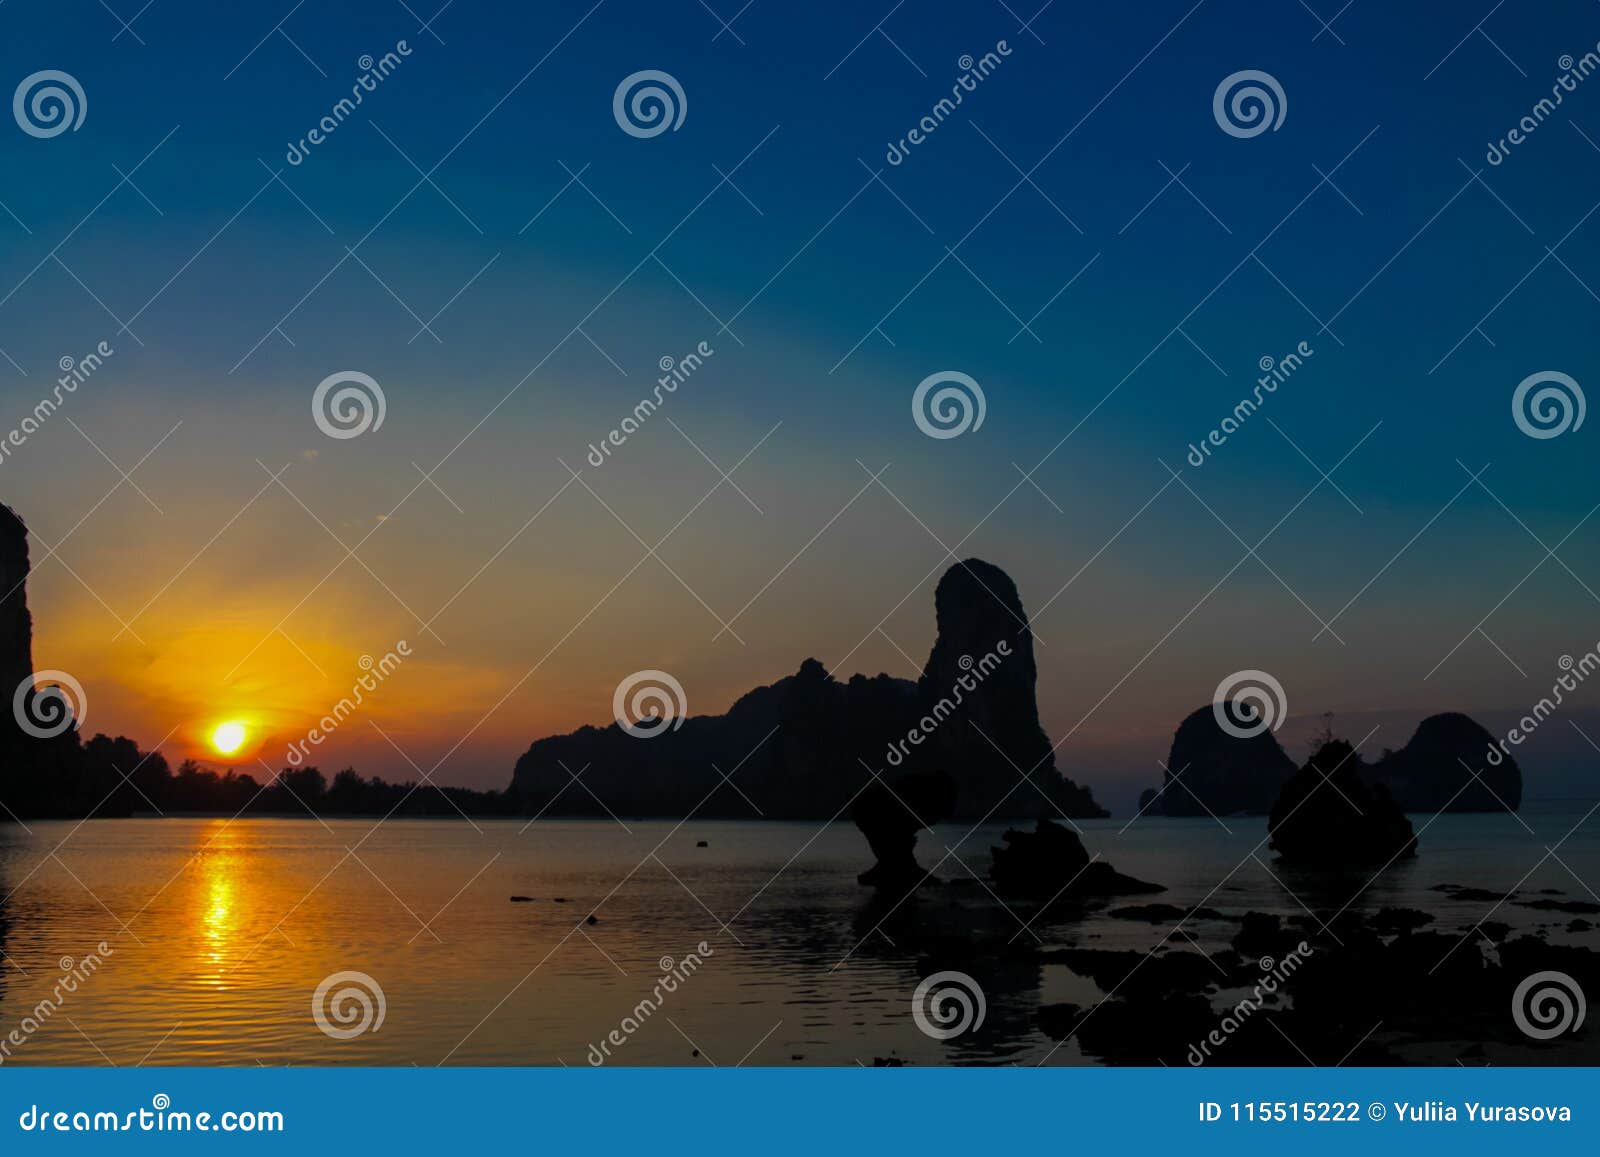 Silhouette Of Mountain Cliff At Sunrise On Sea Beach Resort - 